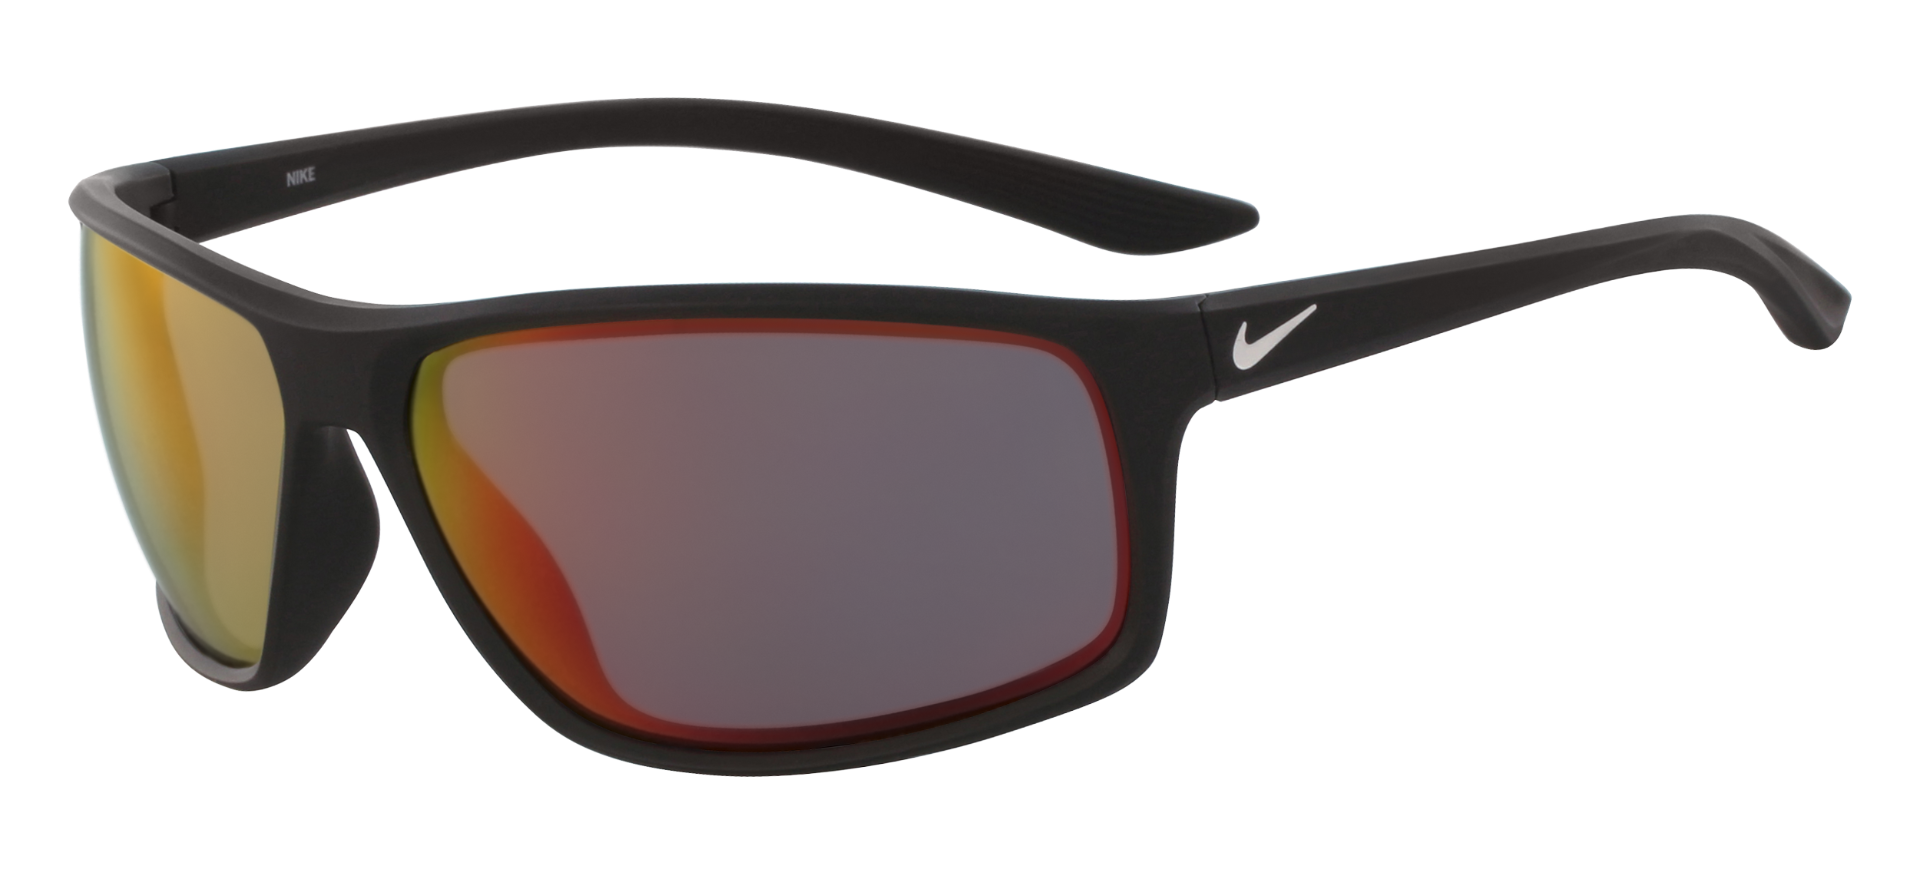 nike adrenaline 2 men's prescription sunglasses in black with infrared lenses